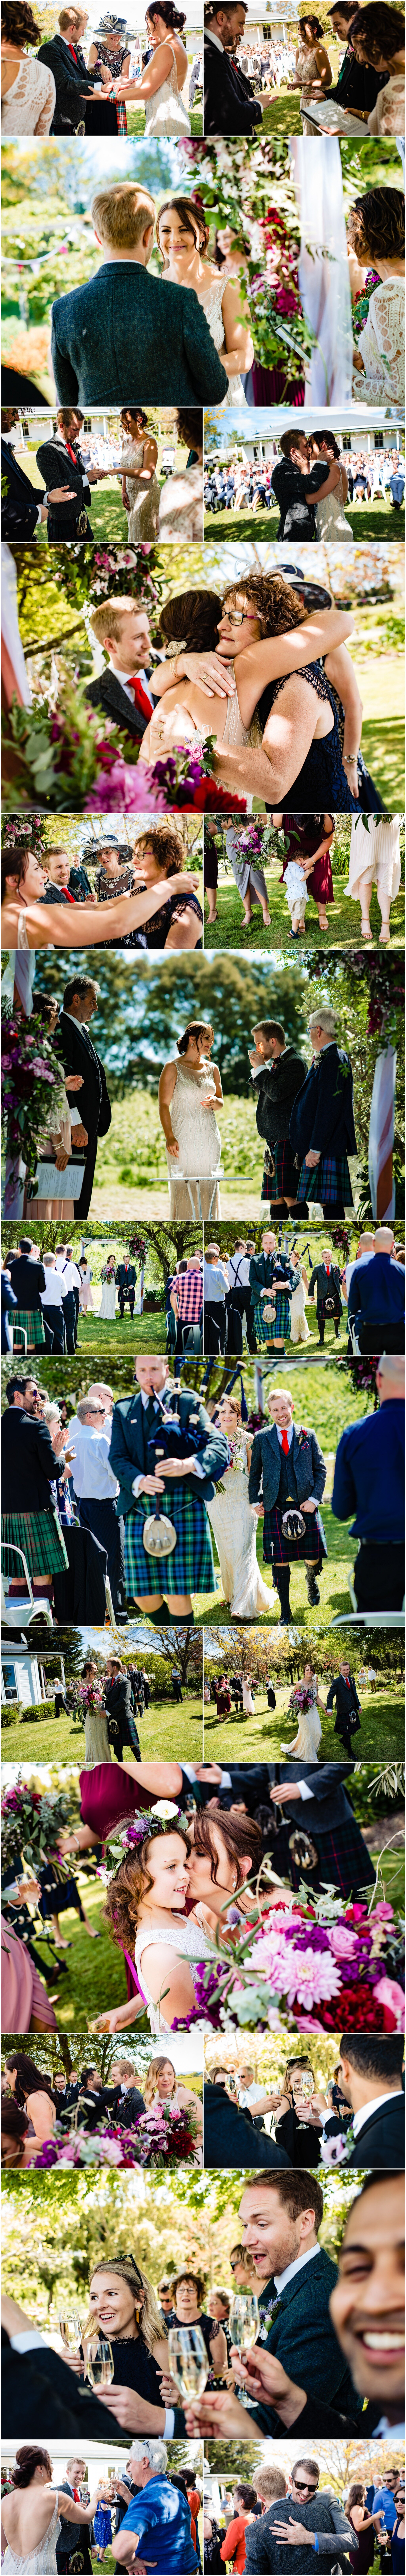 ricky-baillie-photography-wedding-photographers-in-auckland-new-zealand_0004.jpg